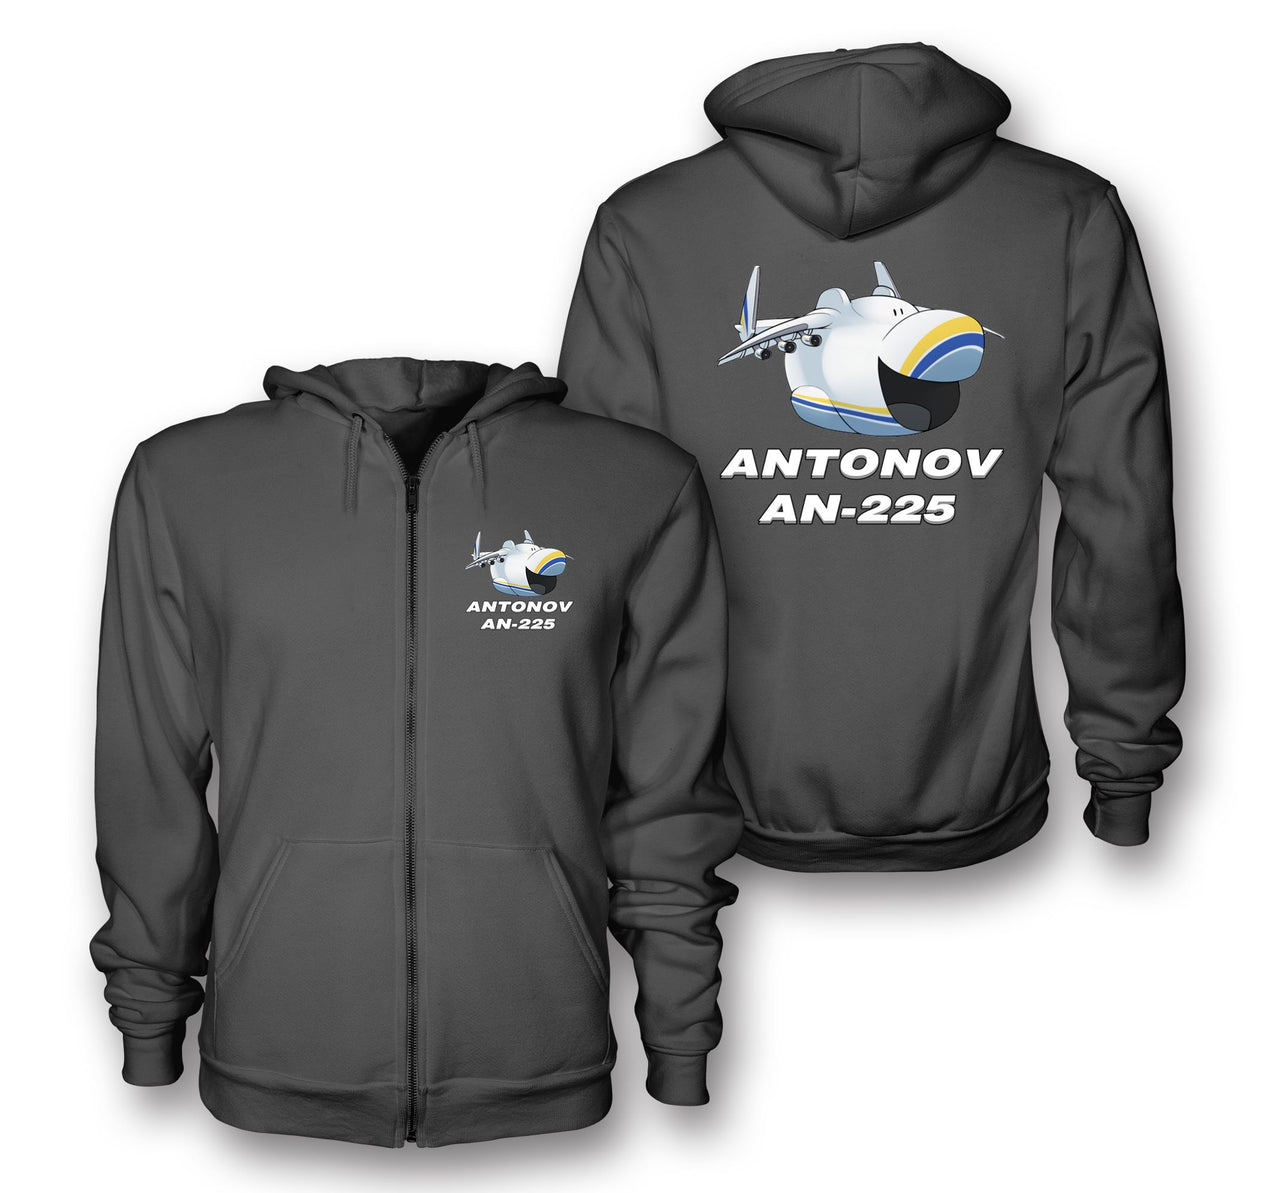 Antonov AN-225 (23) Designed Zipped Hoodies